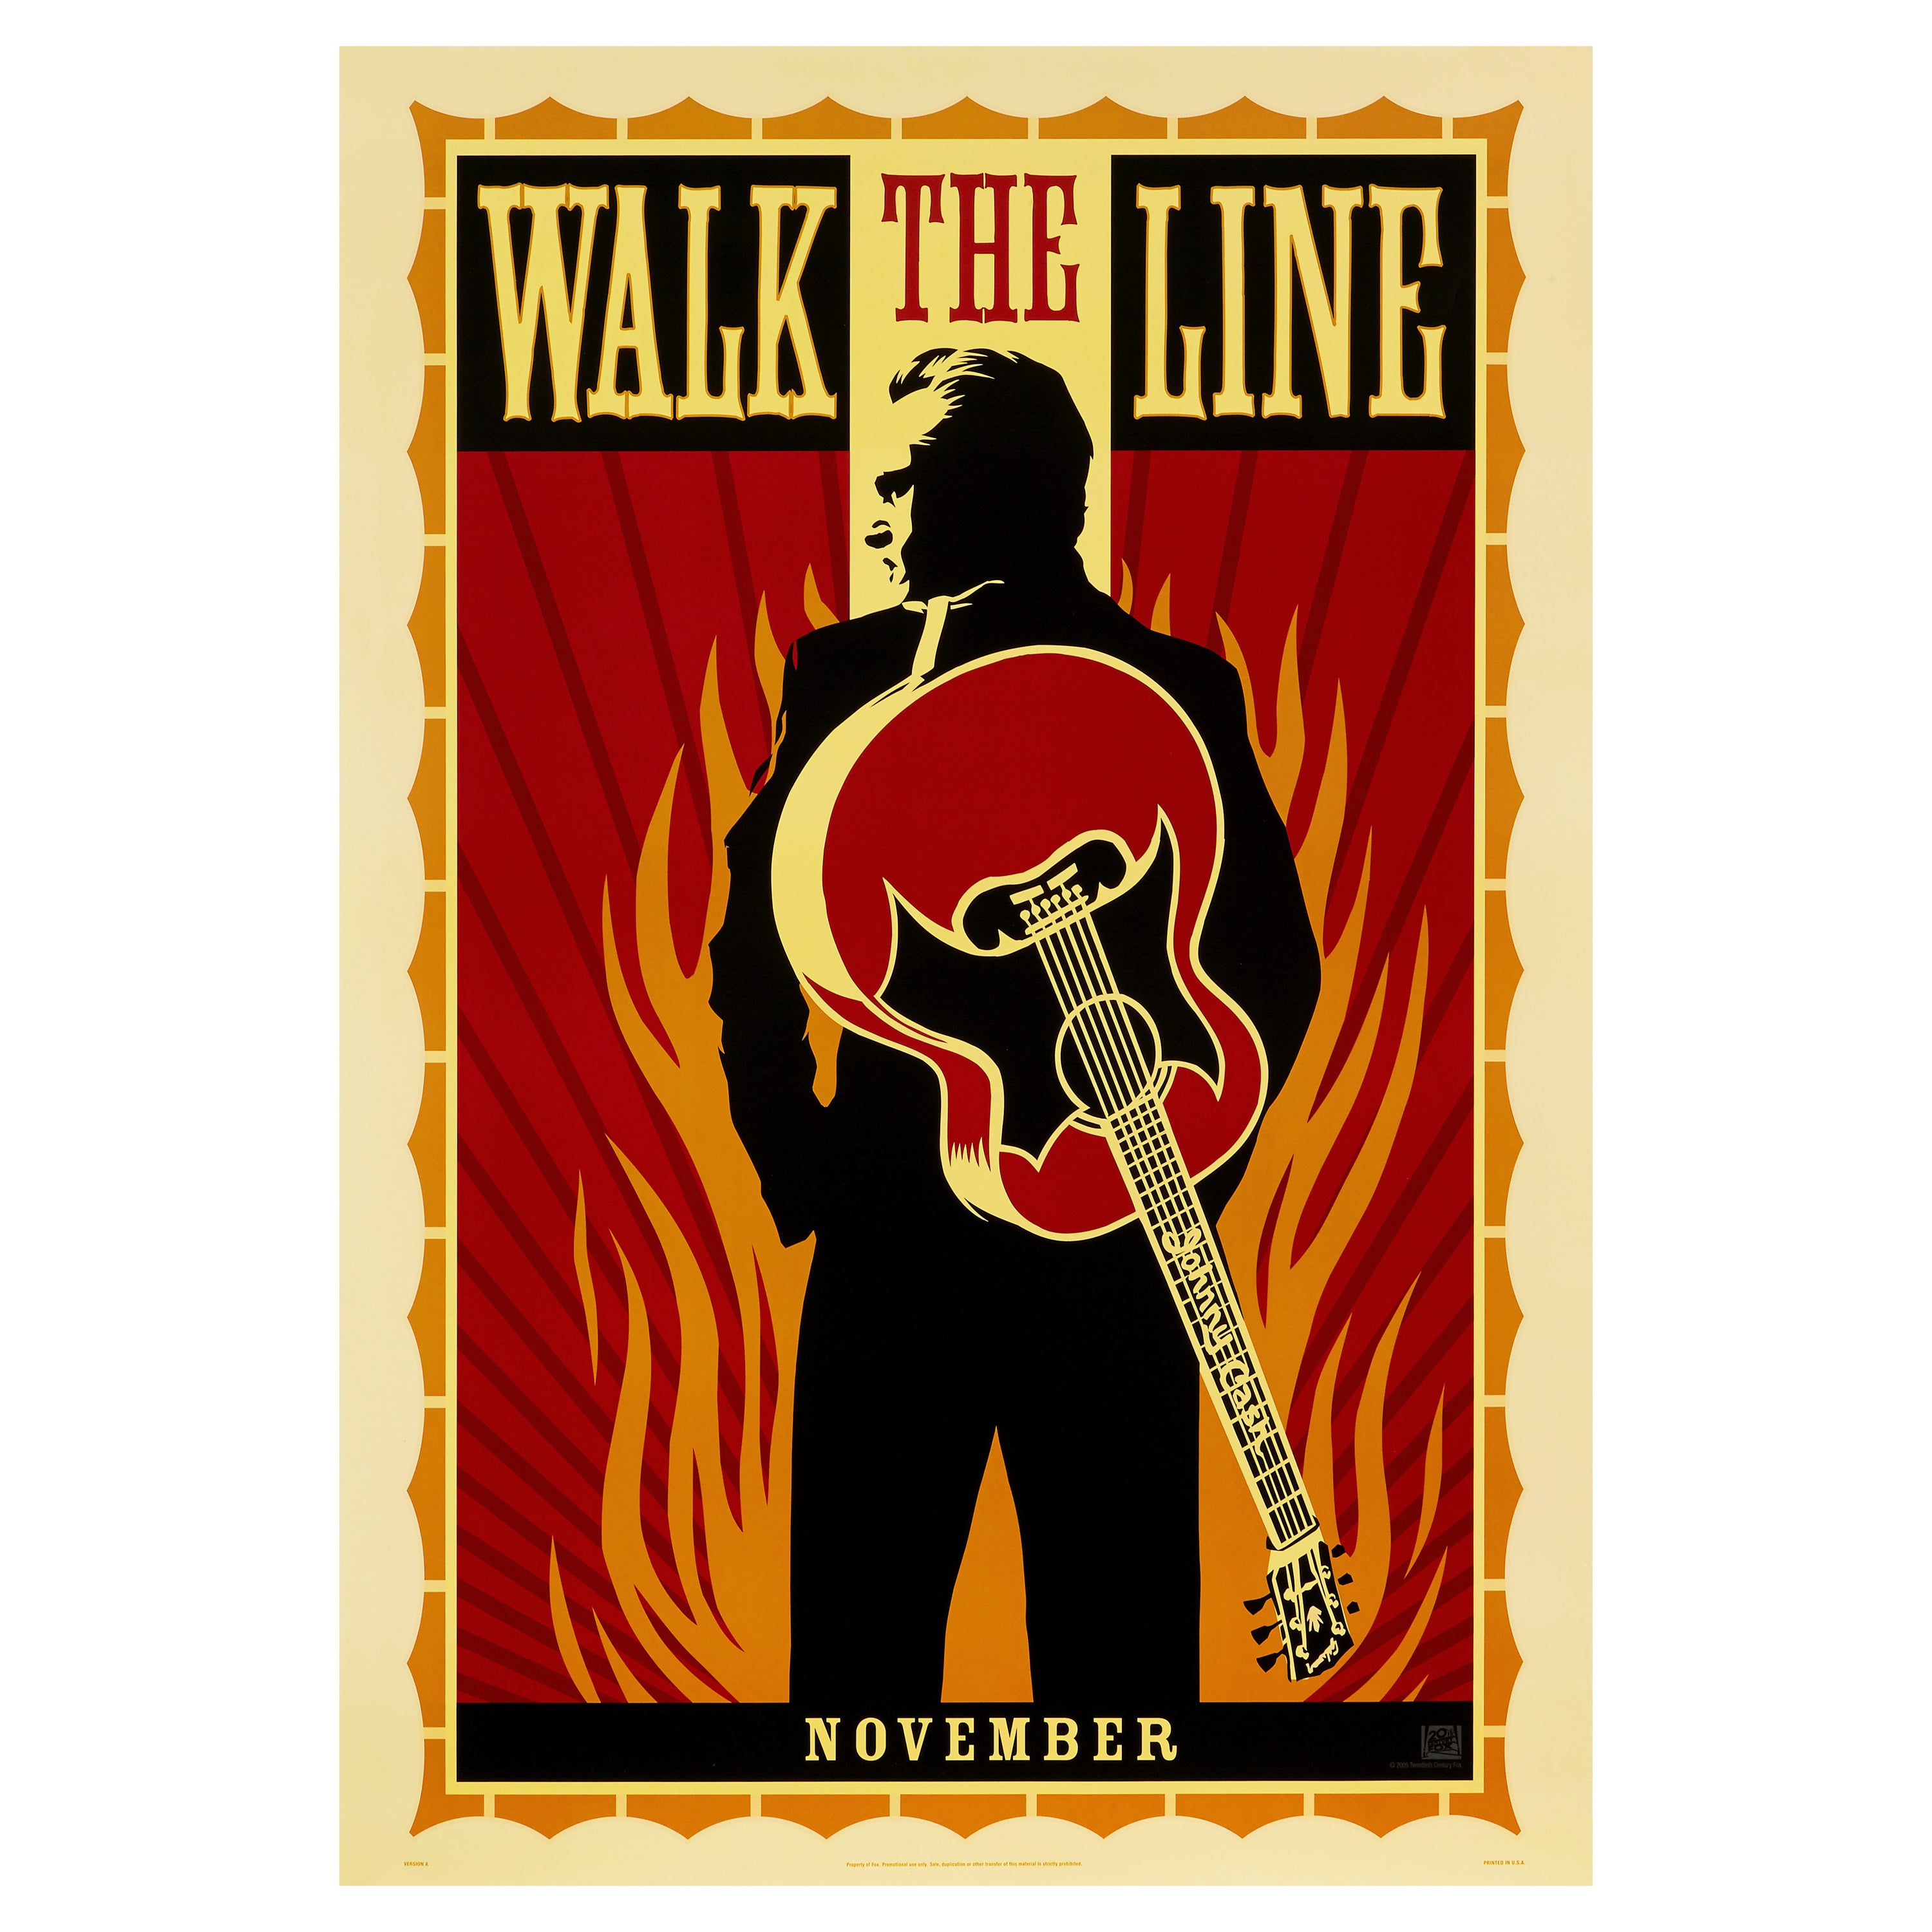 'Walk the Line' Original Movie Poster by Shepard Fairey, American, 2005